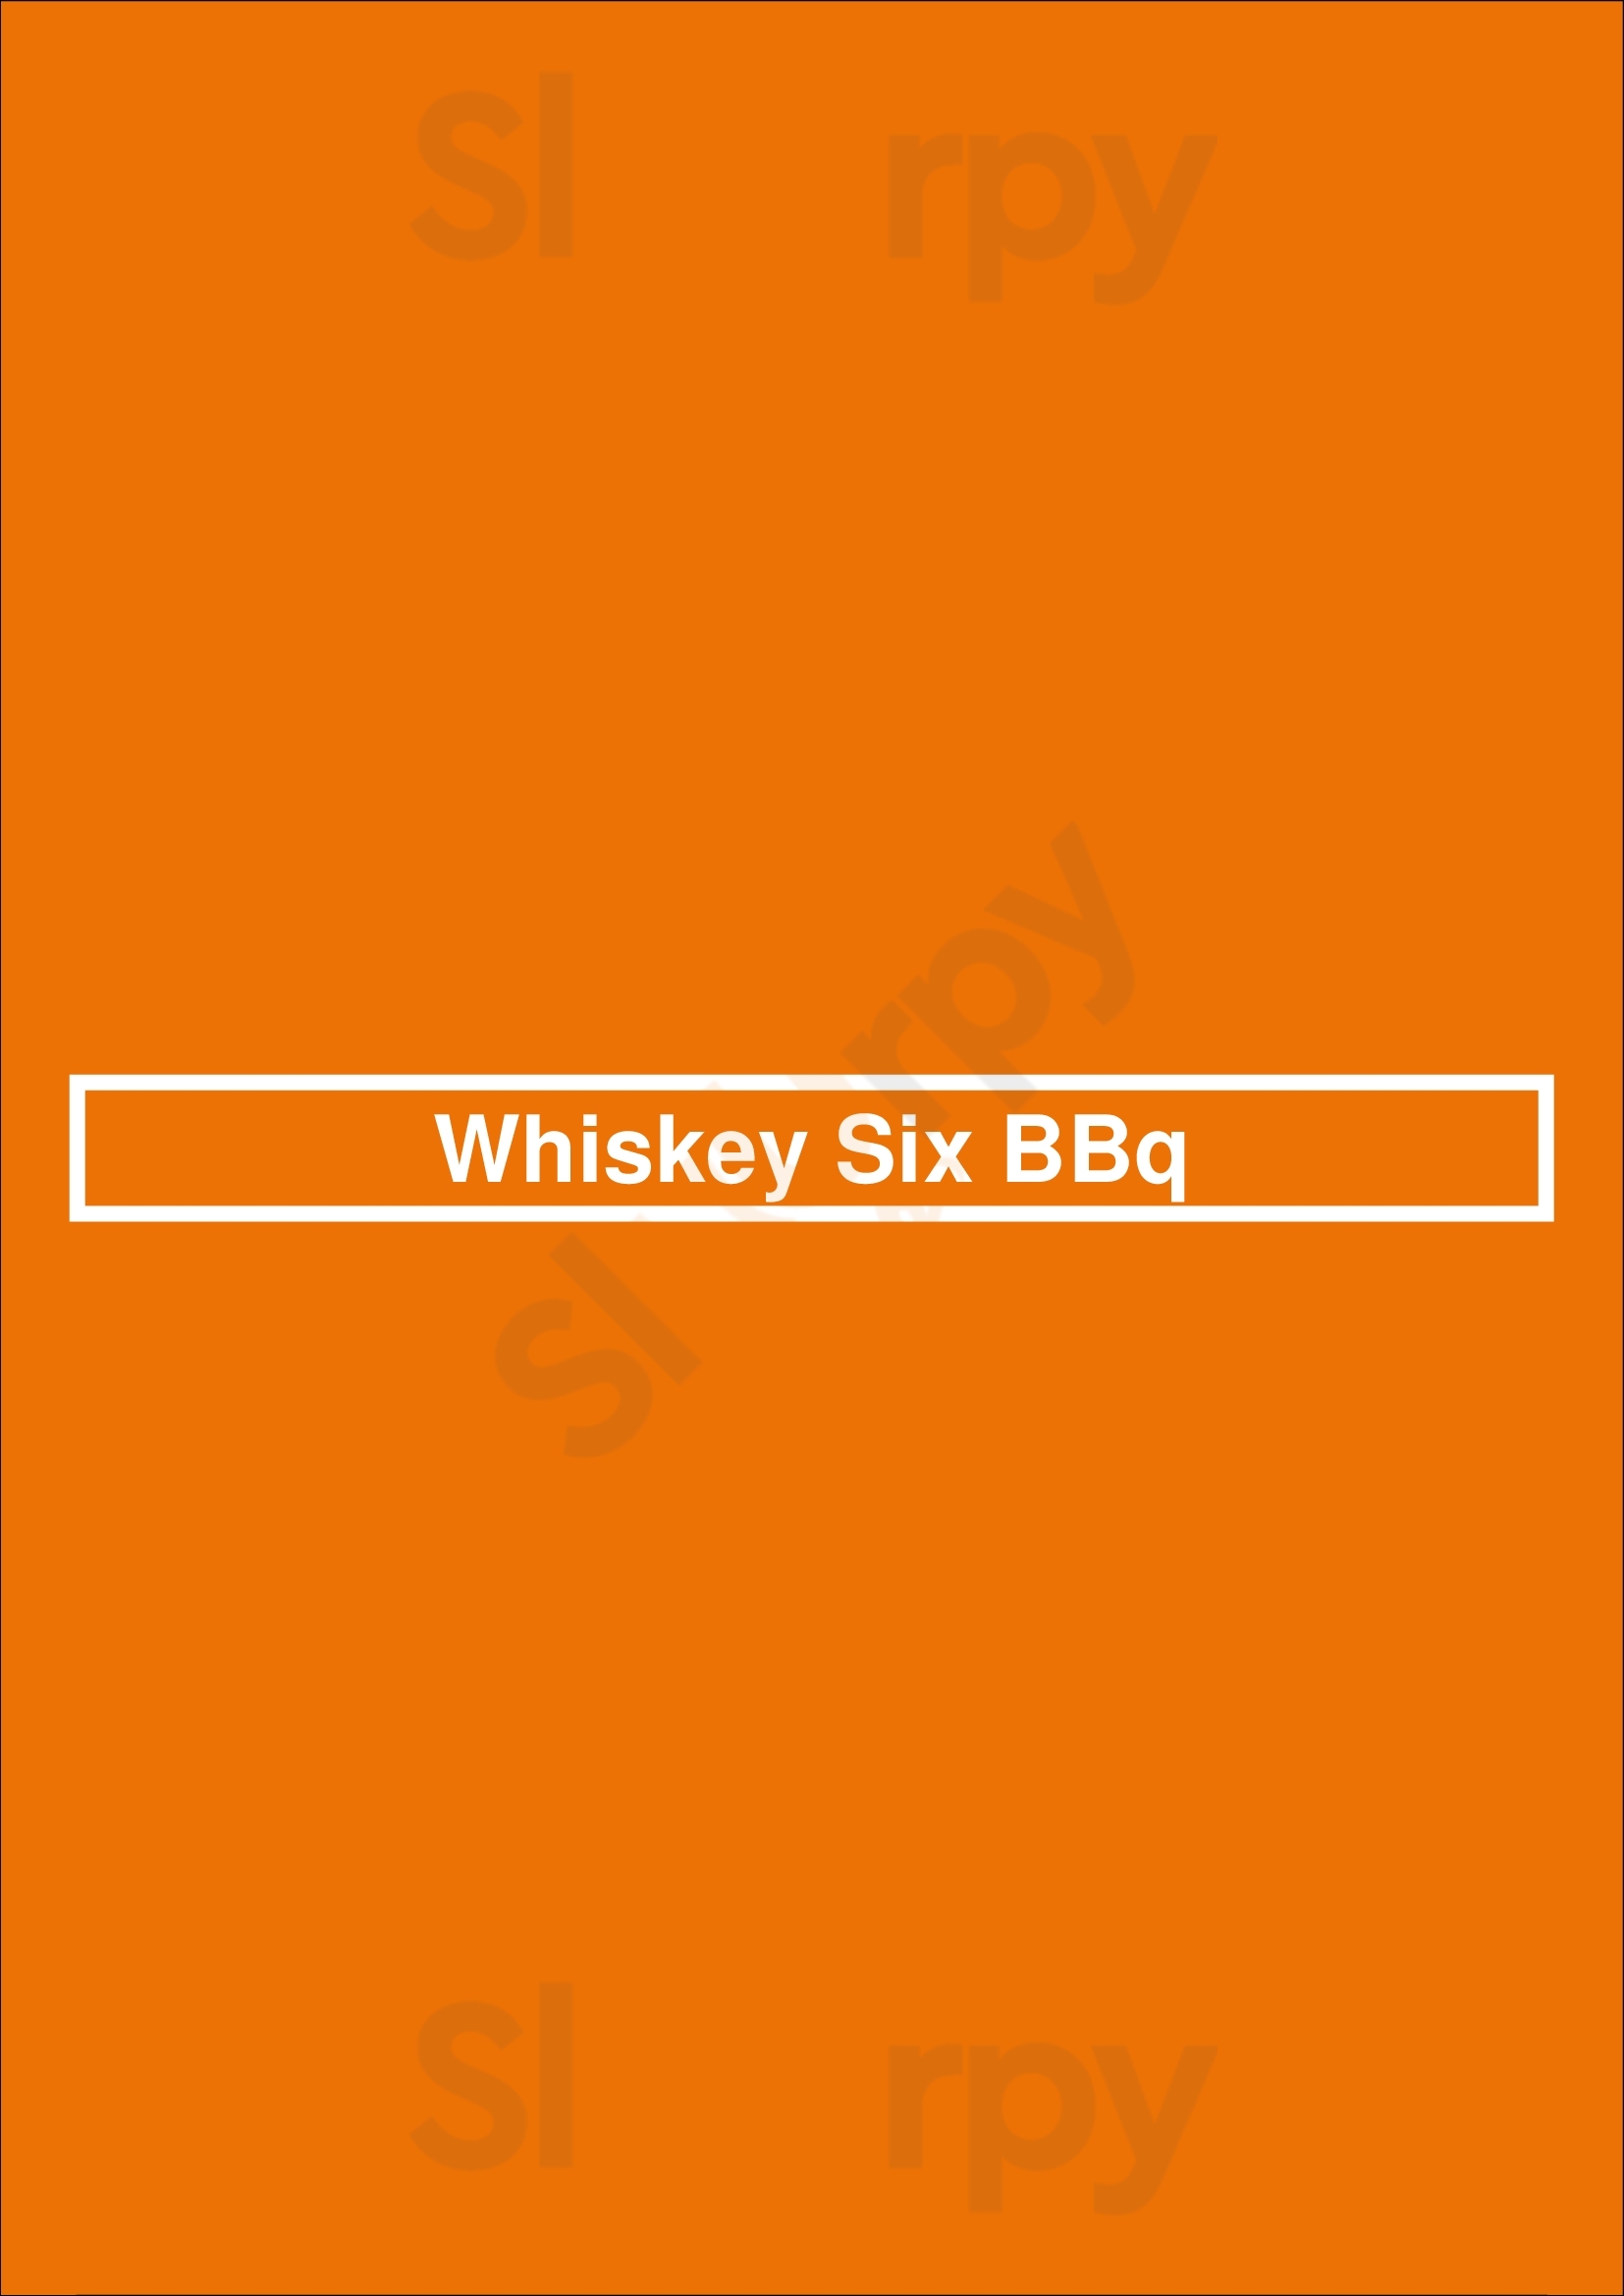 Whiskey Six Bbq Vancouver Menu - 1